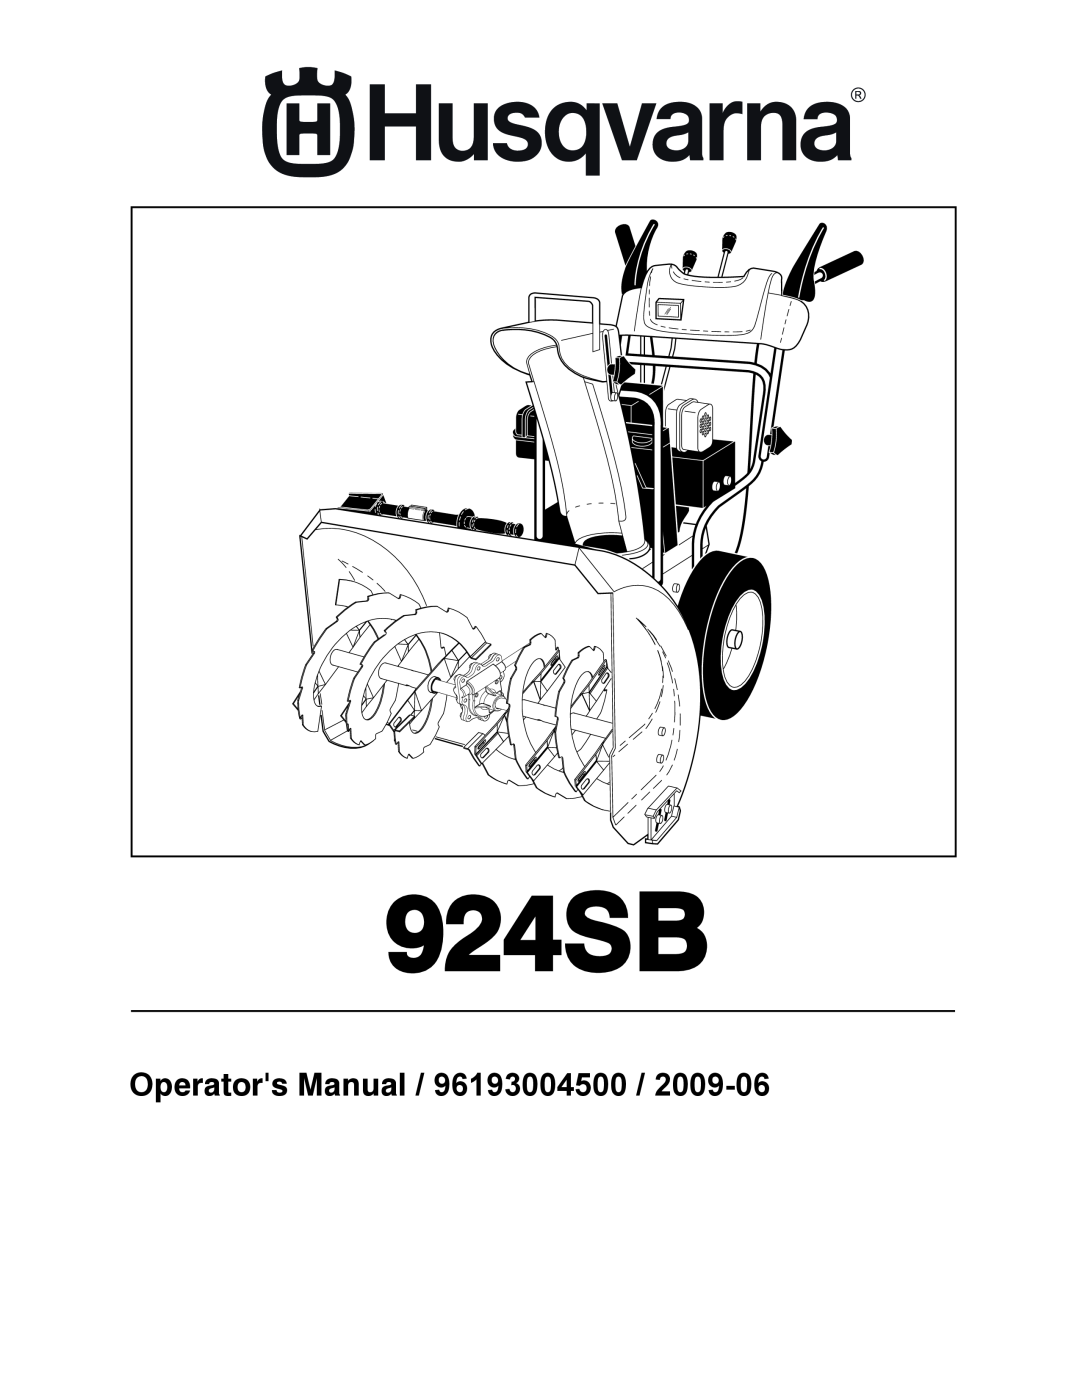 Husqvarna 96193004500 manual 924SB, Operators Manual 